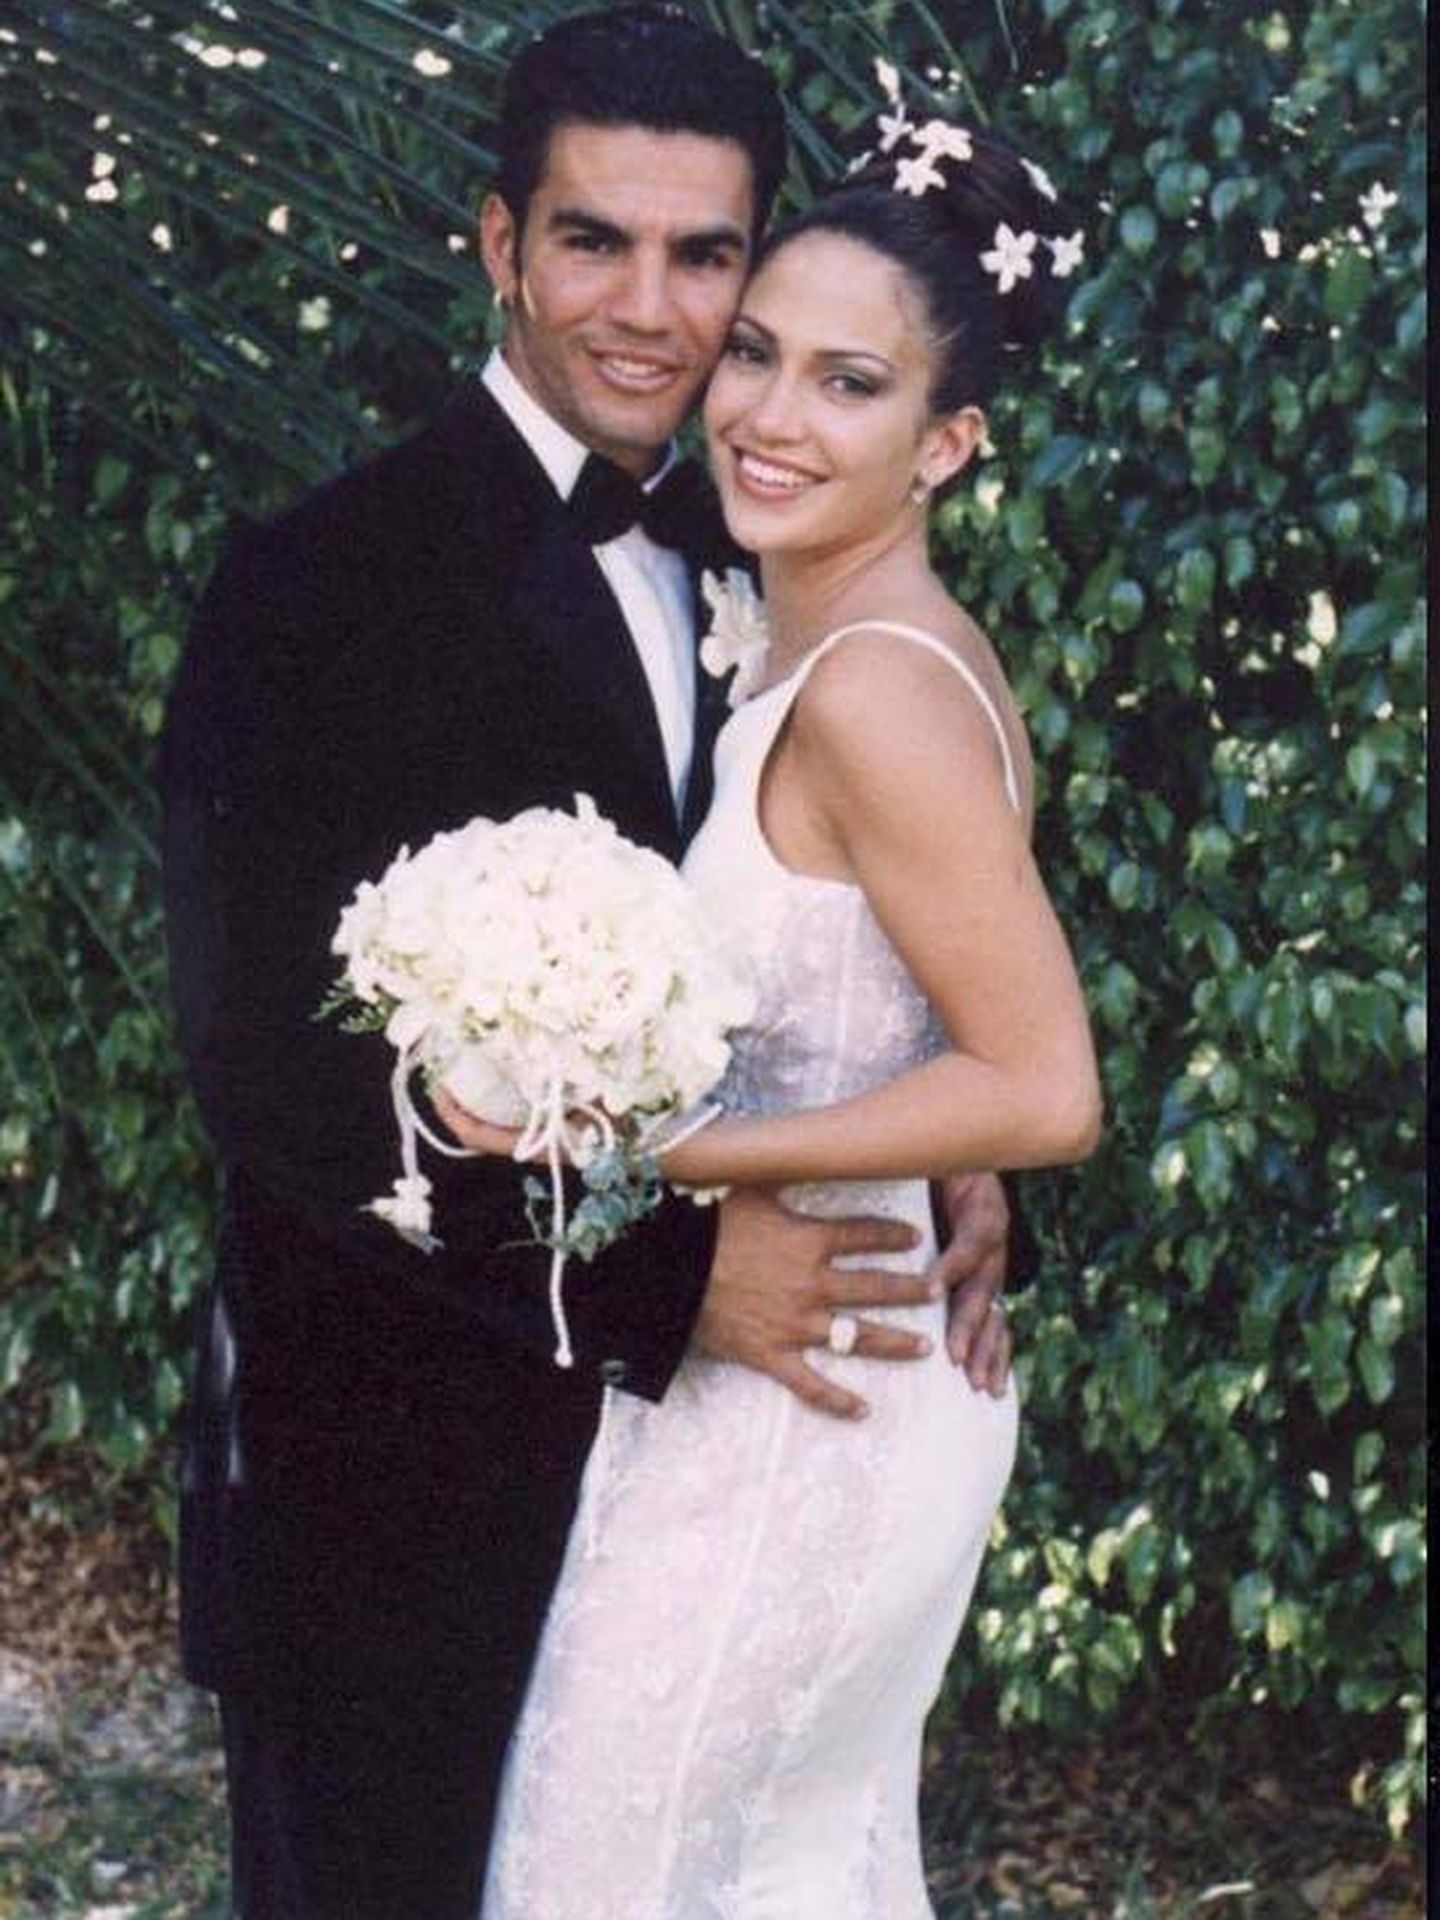 La primera boda de Jennifer Lopez con Ojani Noa. (Instagram)